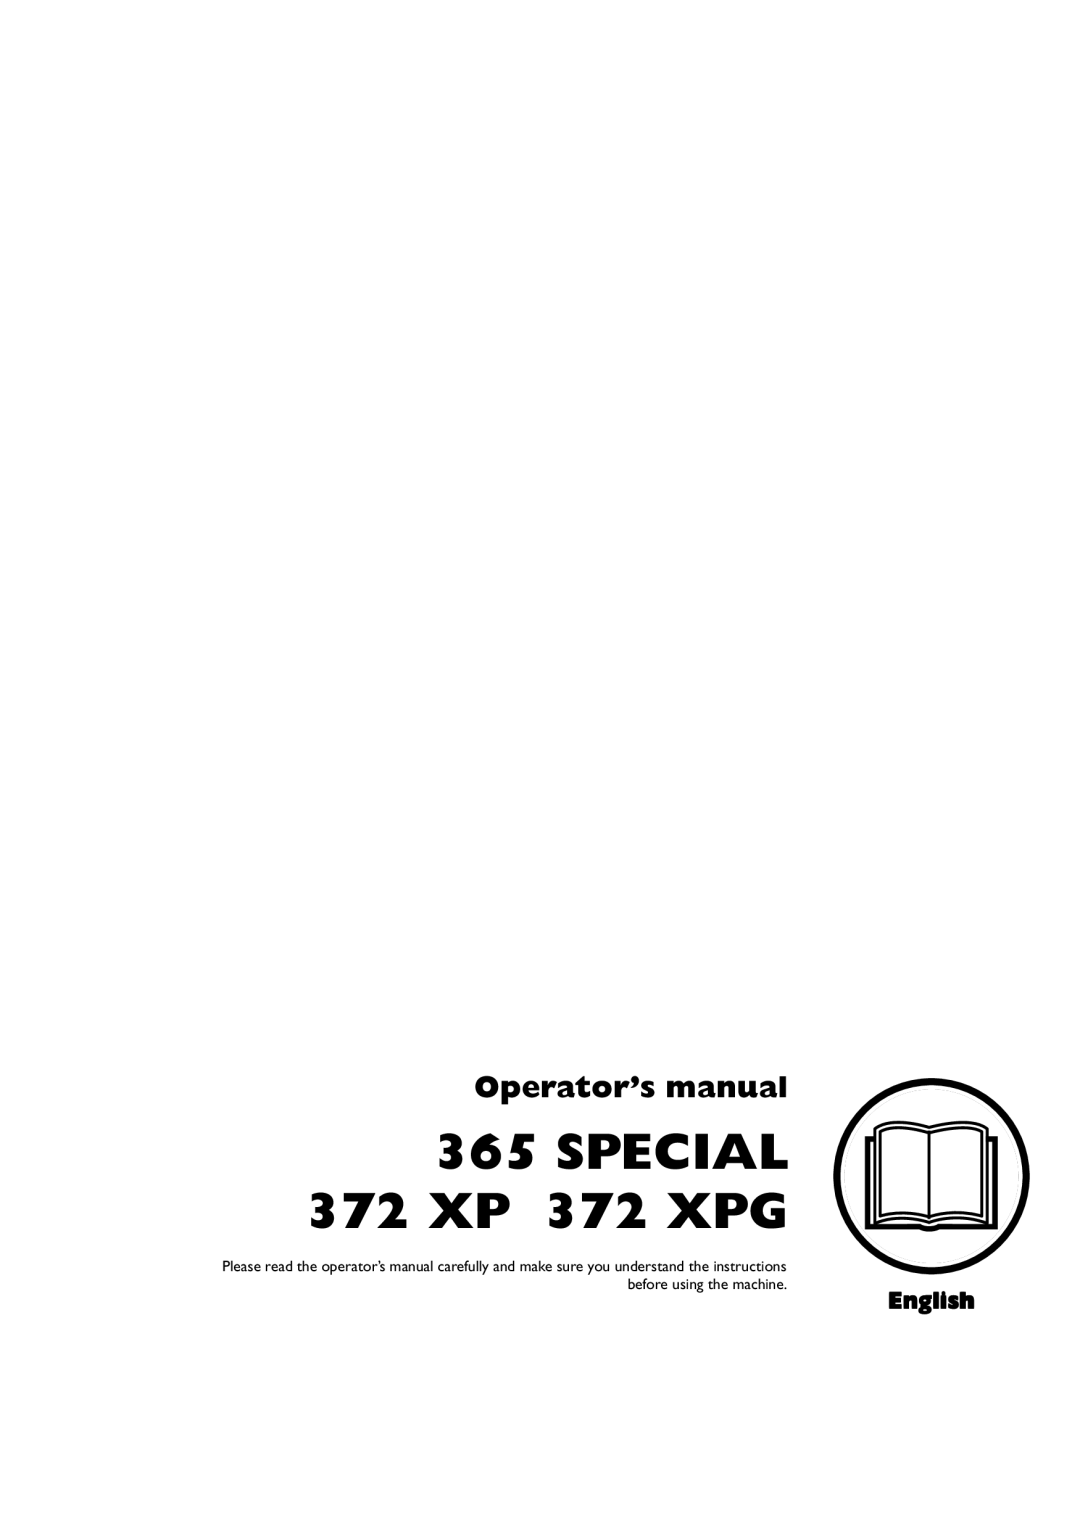 Husqvarna manual 365SPECIAL 372 XP 372 XPG, Operator’s manual, English 